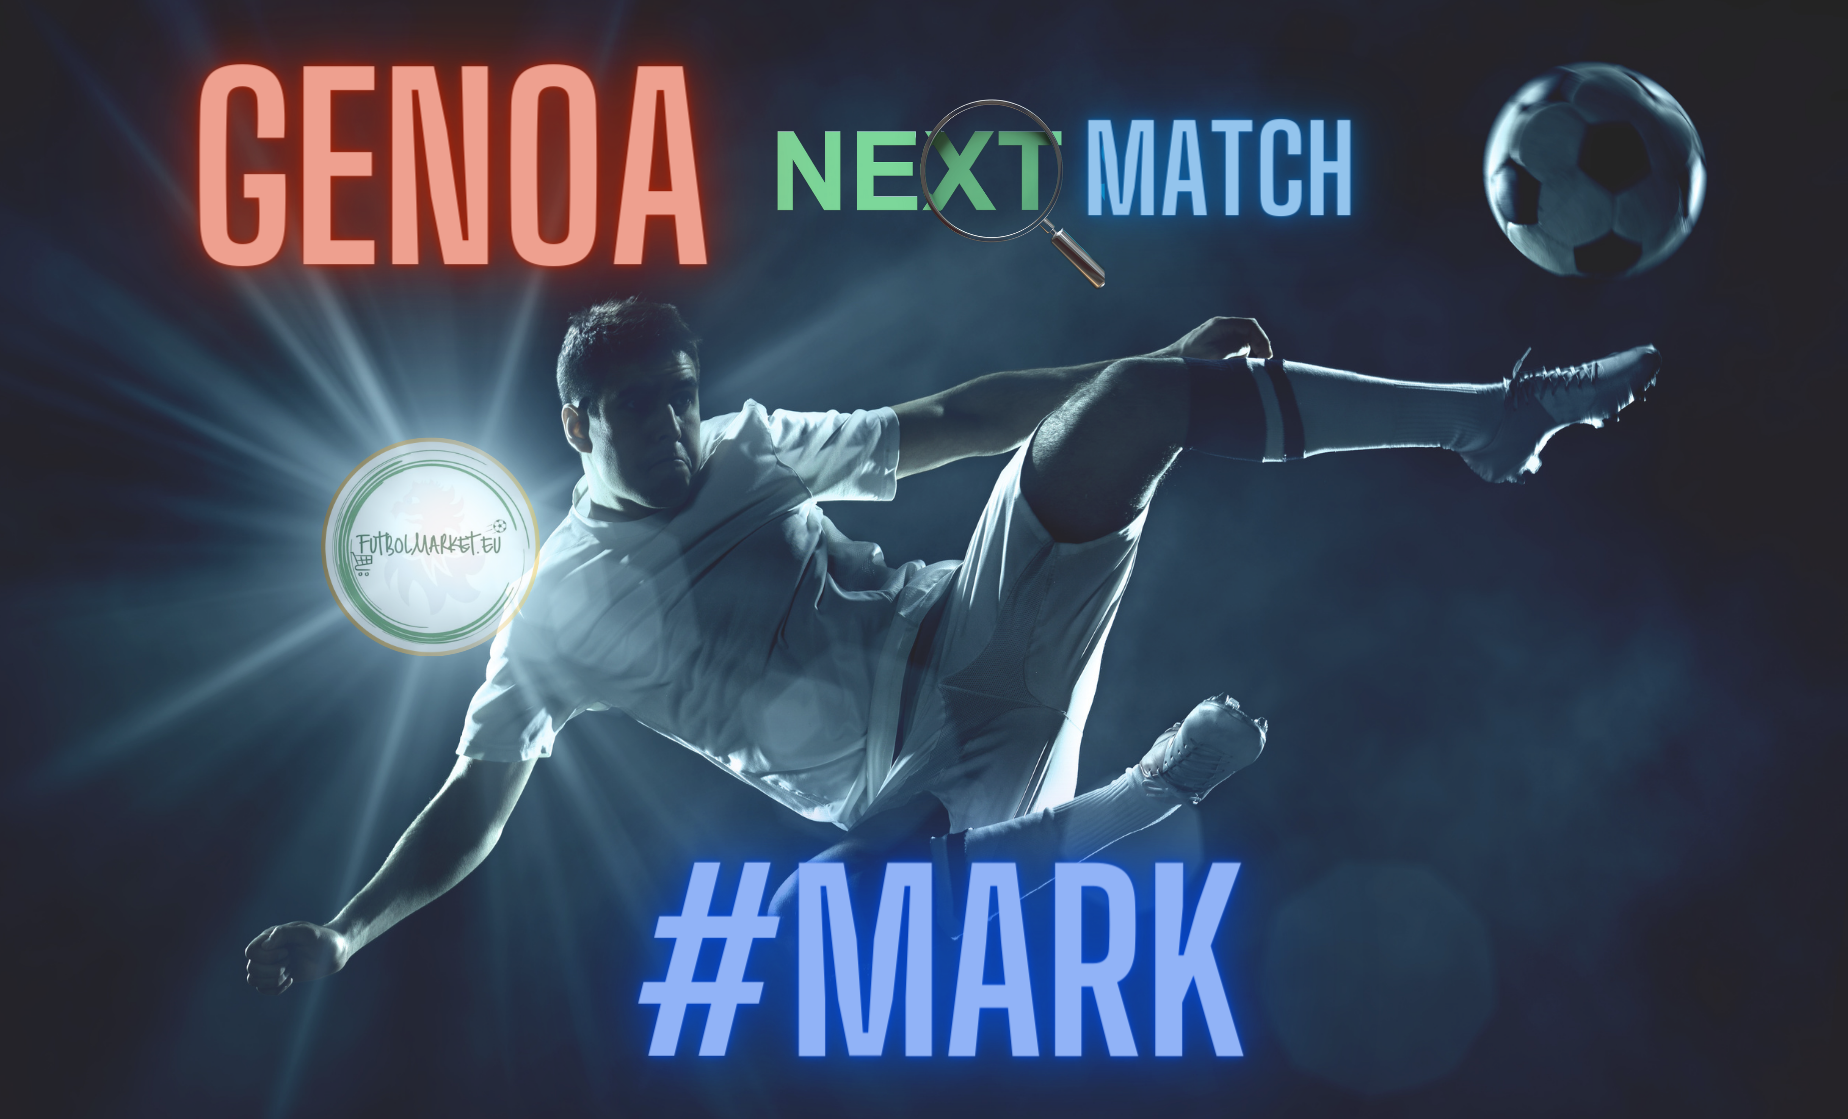 mark futbolmarket next match wordpress (1)